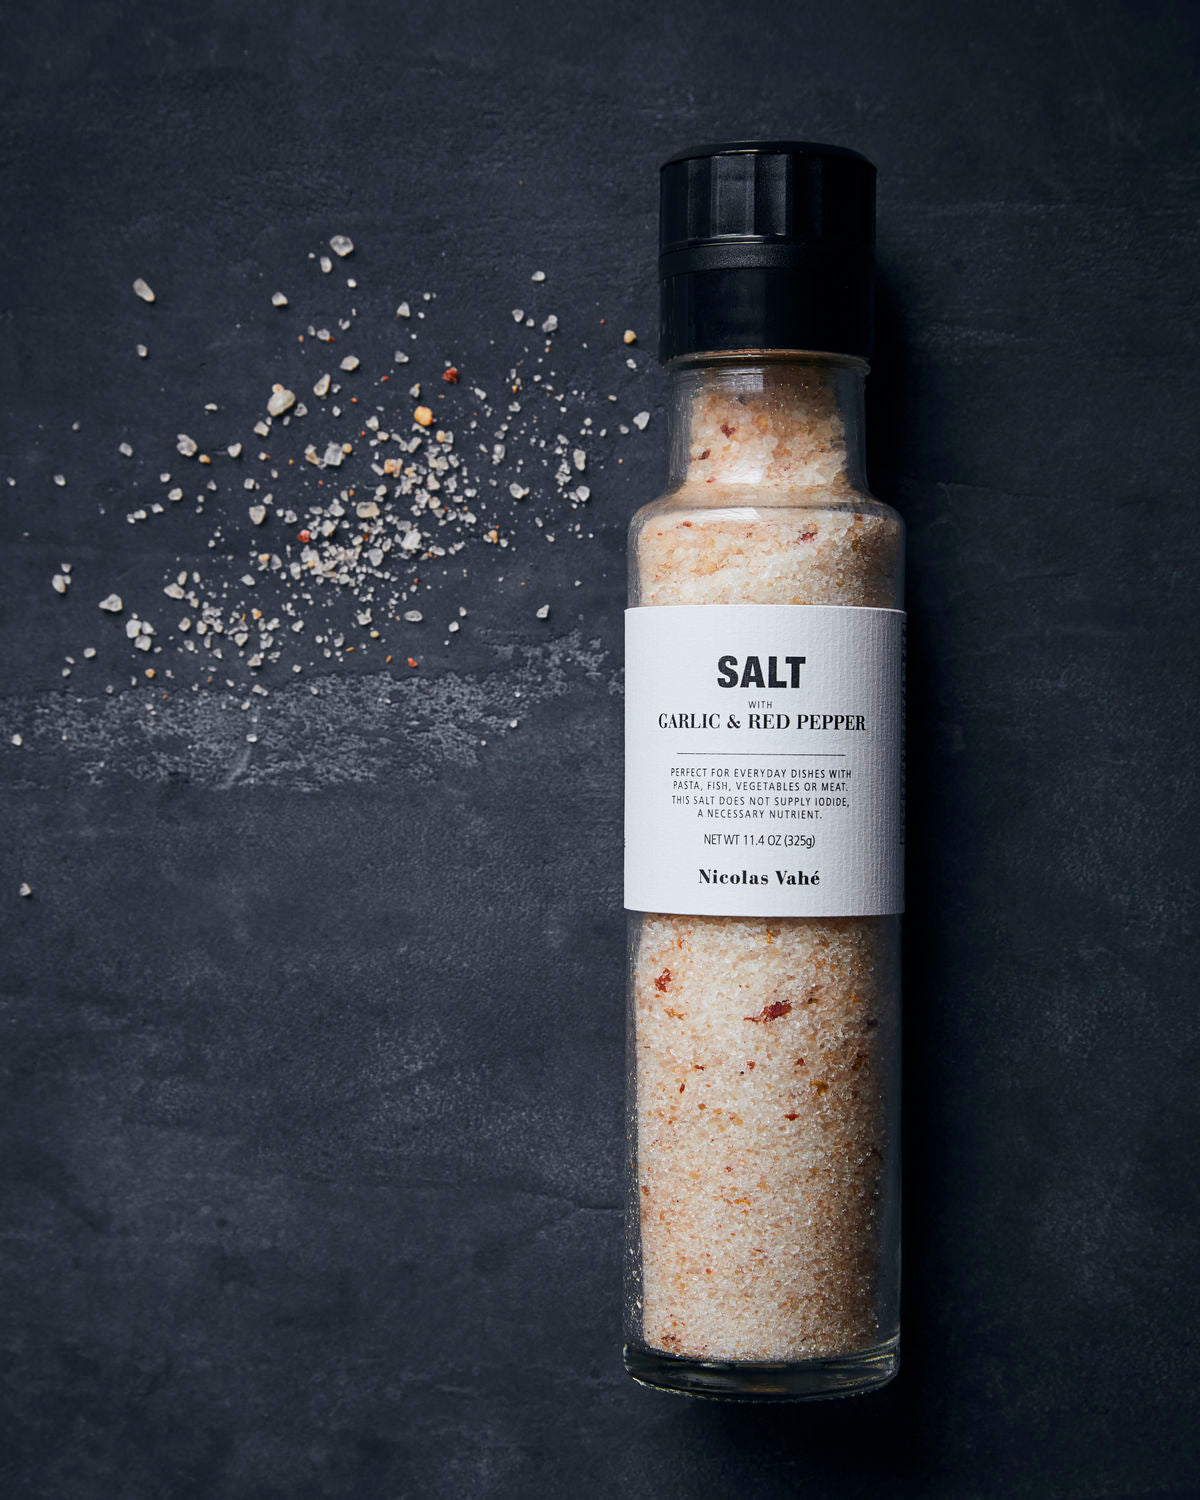 Salt - Garlic and Red Pepper by Nicolas Vahe